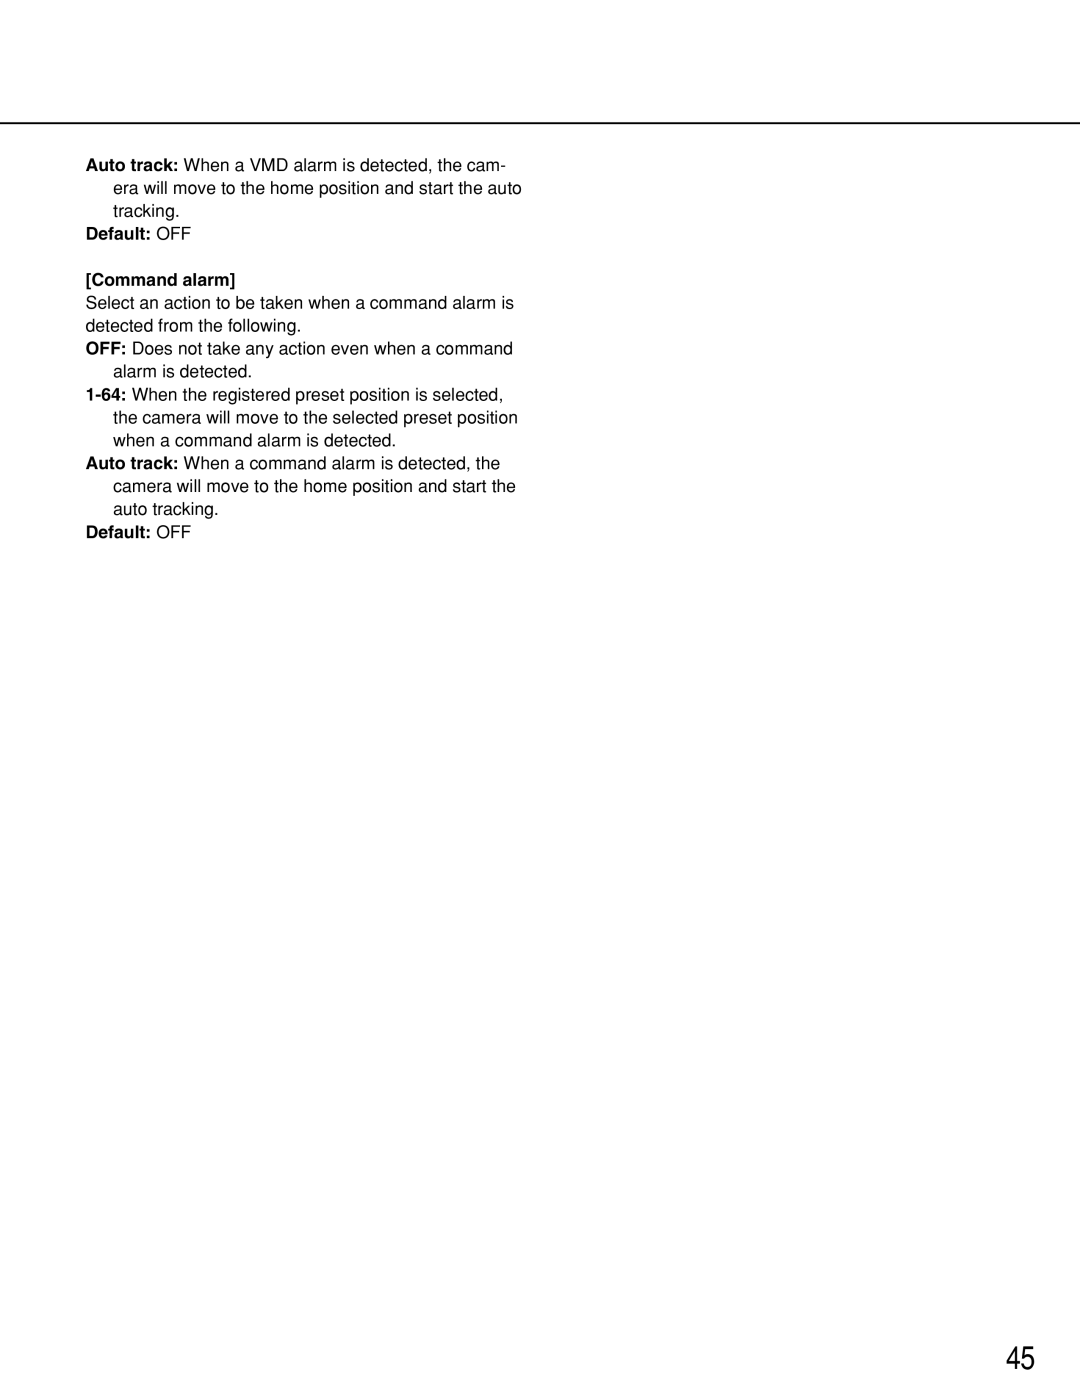 Panasonic WV-NS202 operating instructions Default: OFF Command alarm 